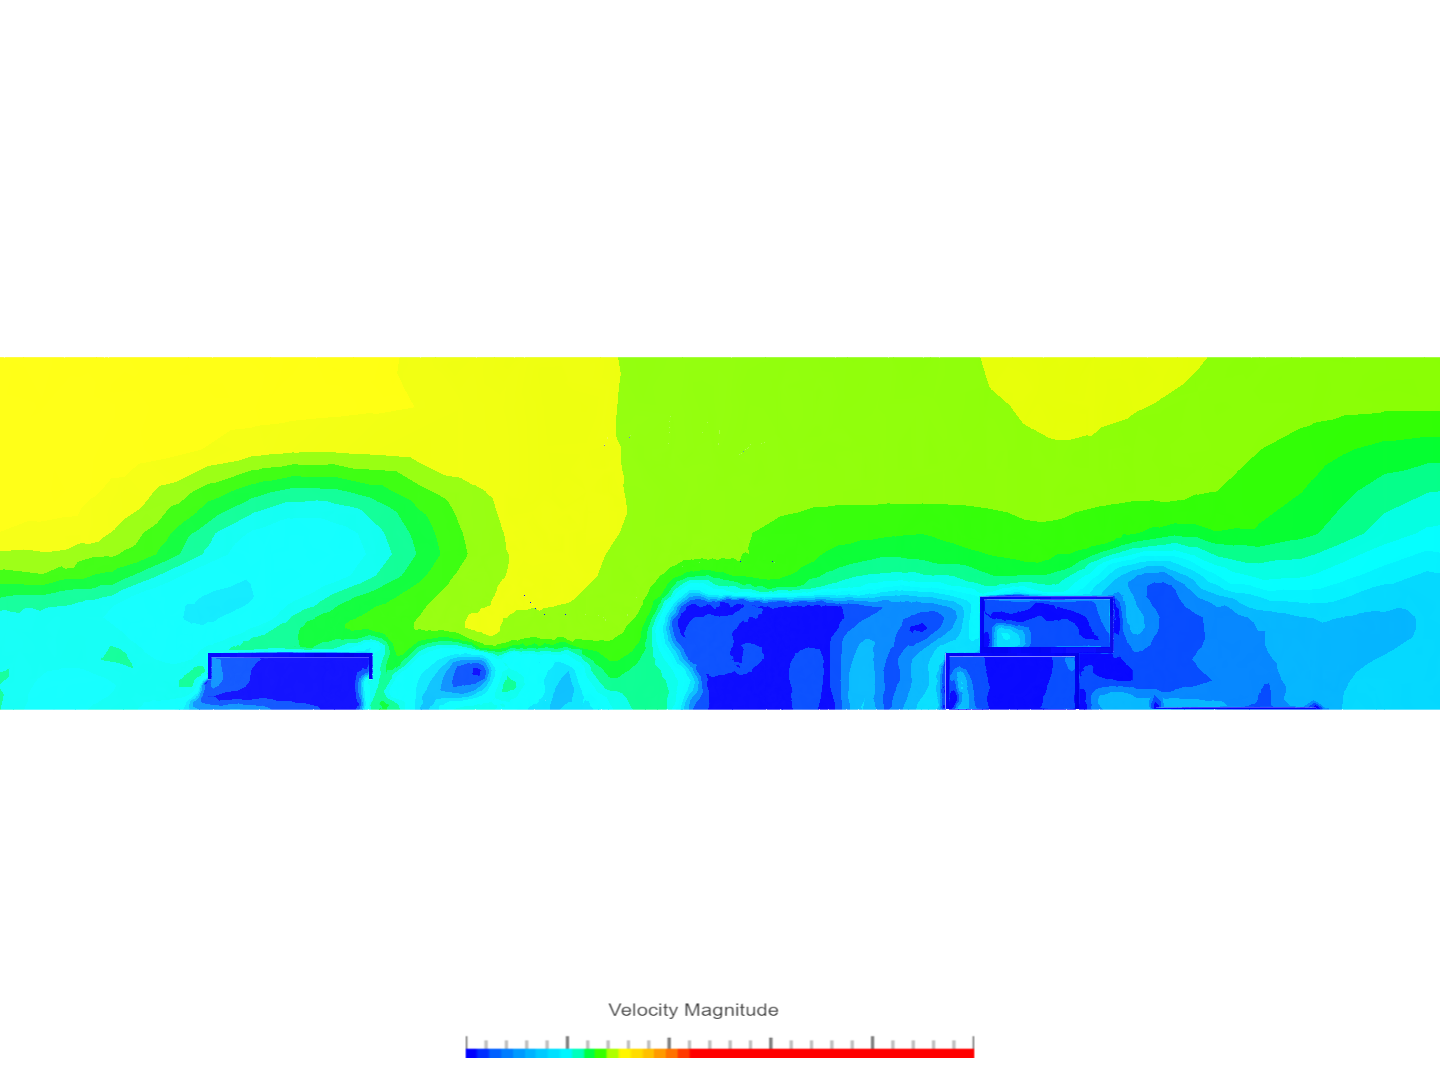 Cfd simulation image